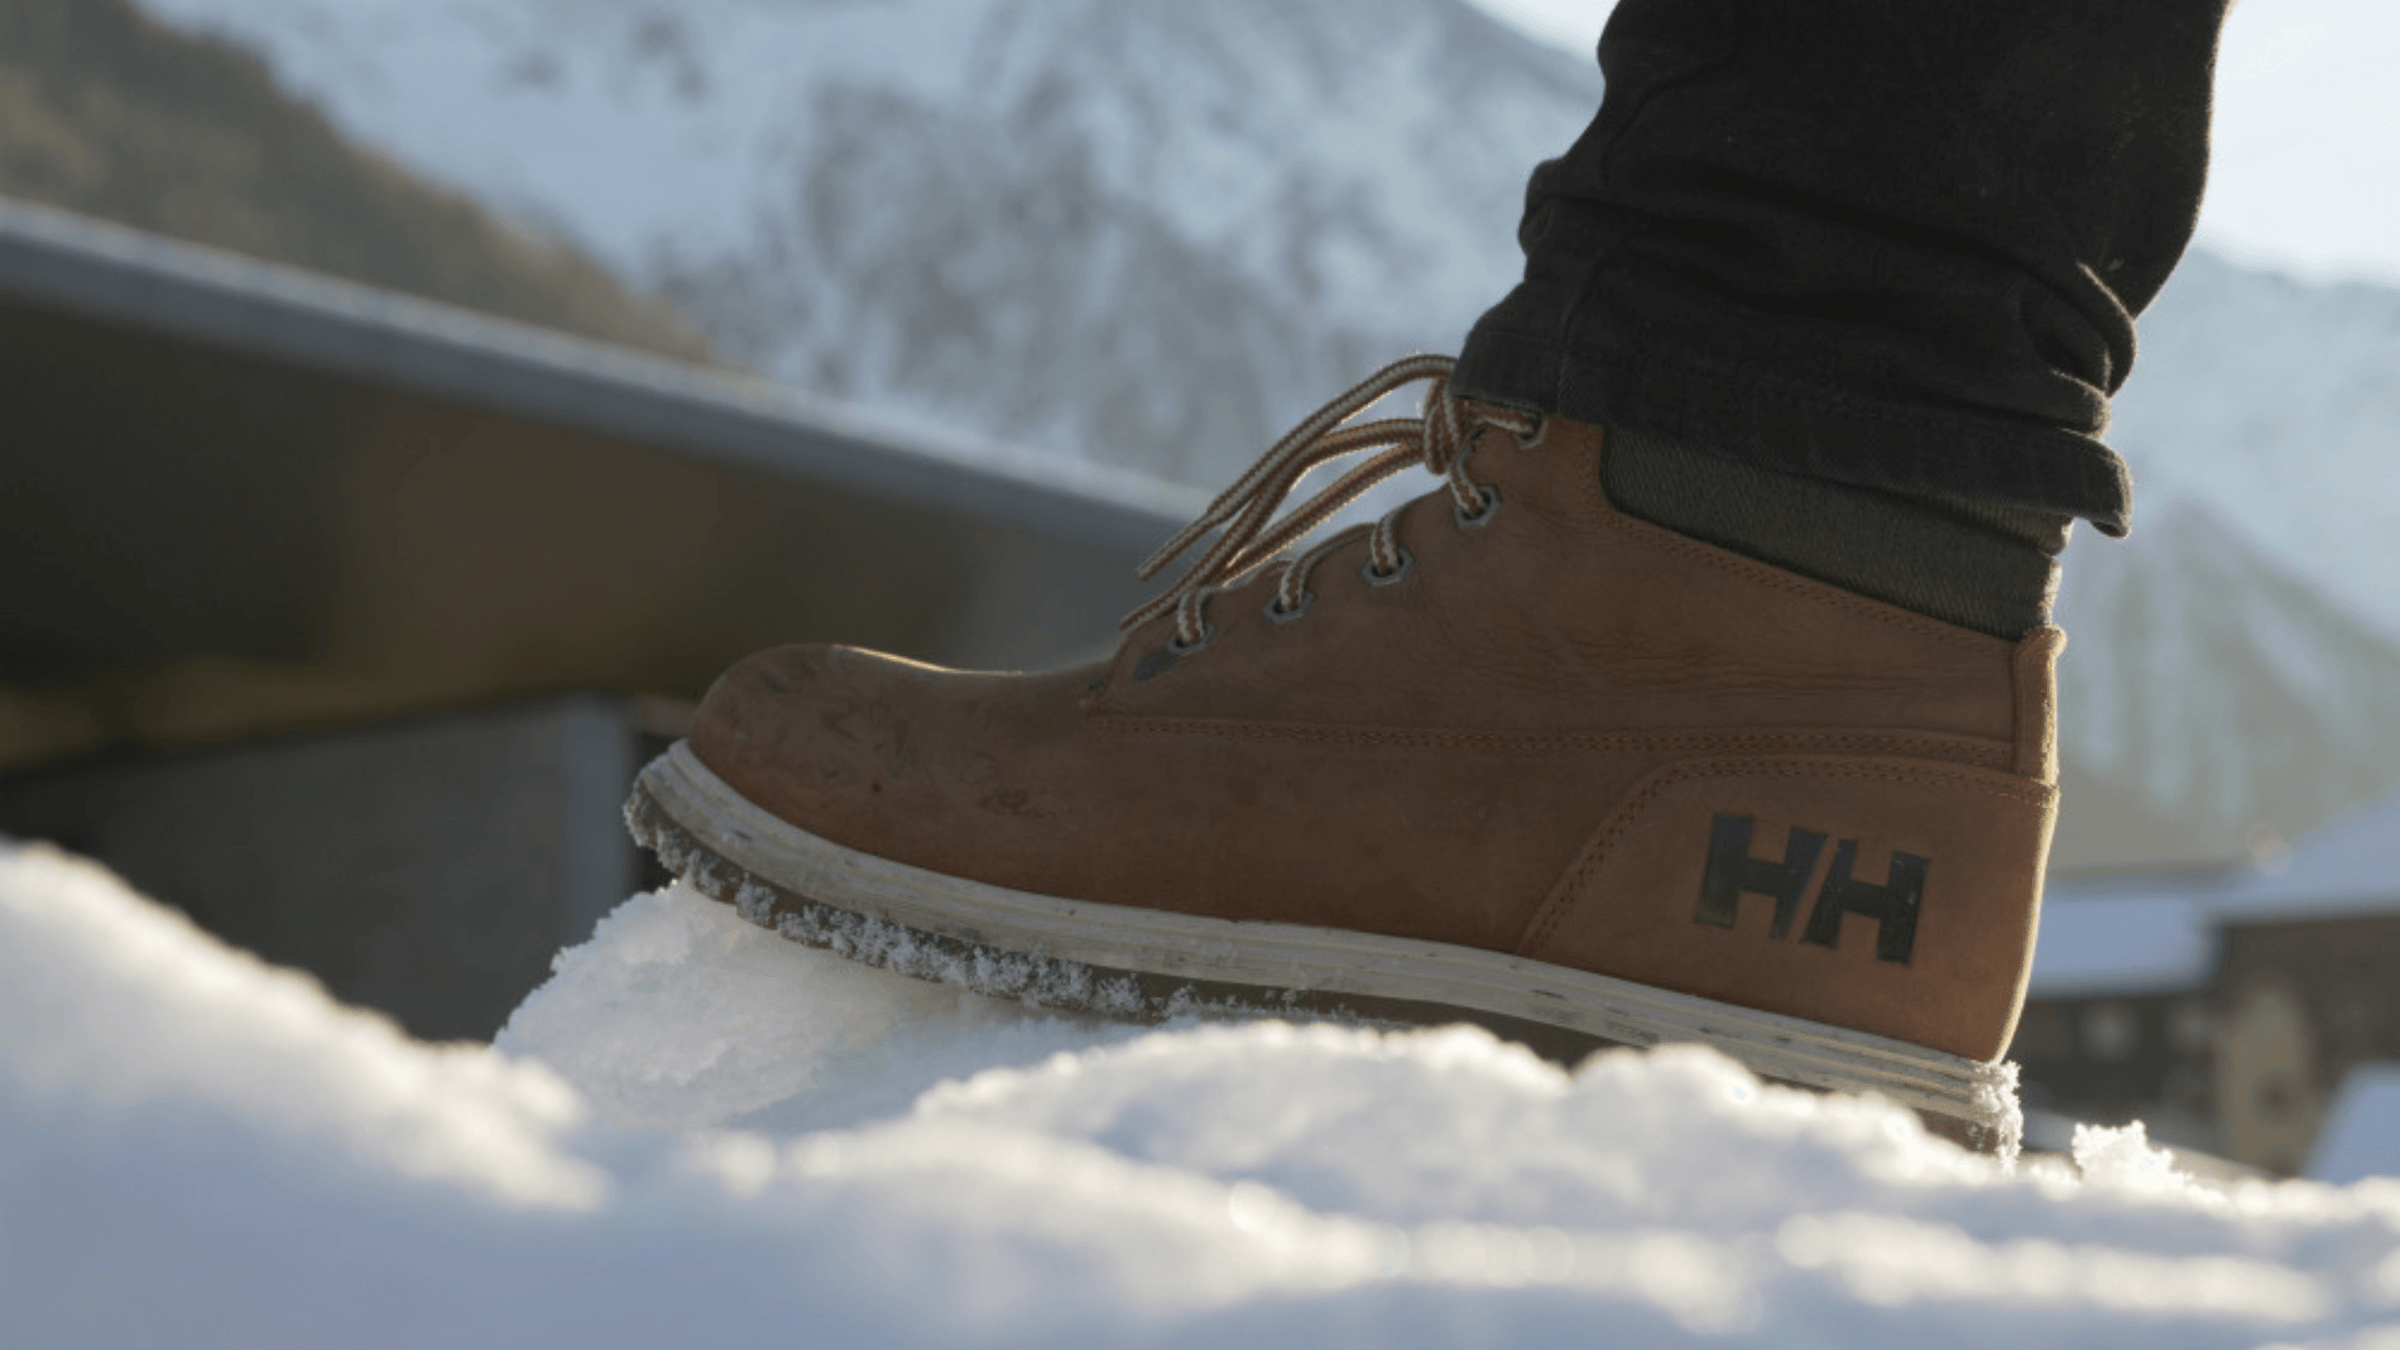 Helly Hansen Work Boots - Helly Safety Boot Range –